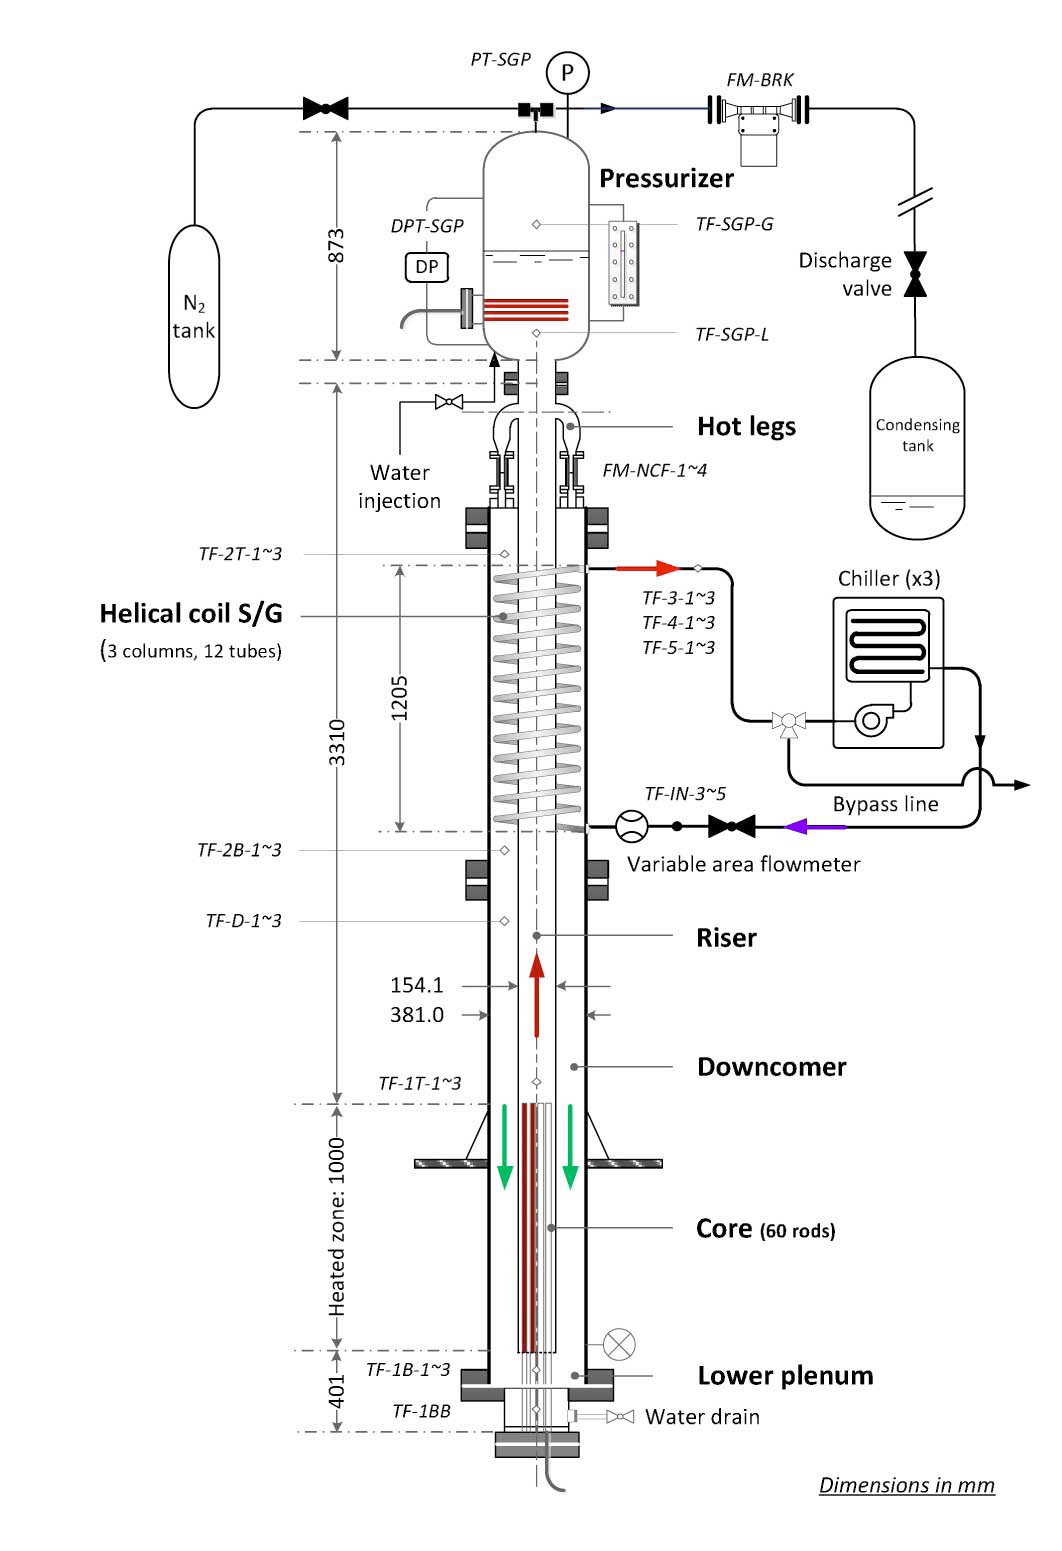 System configuration of RTF and Measurement Instrumentation (TF: Thermocouple for Fluid, PT: Pressure Transmitter, DPT: Differential Pressure Transmitter, FM: Flowmeter)